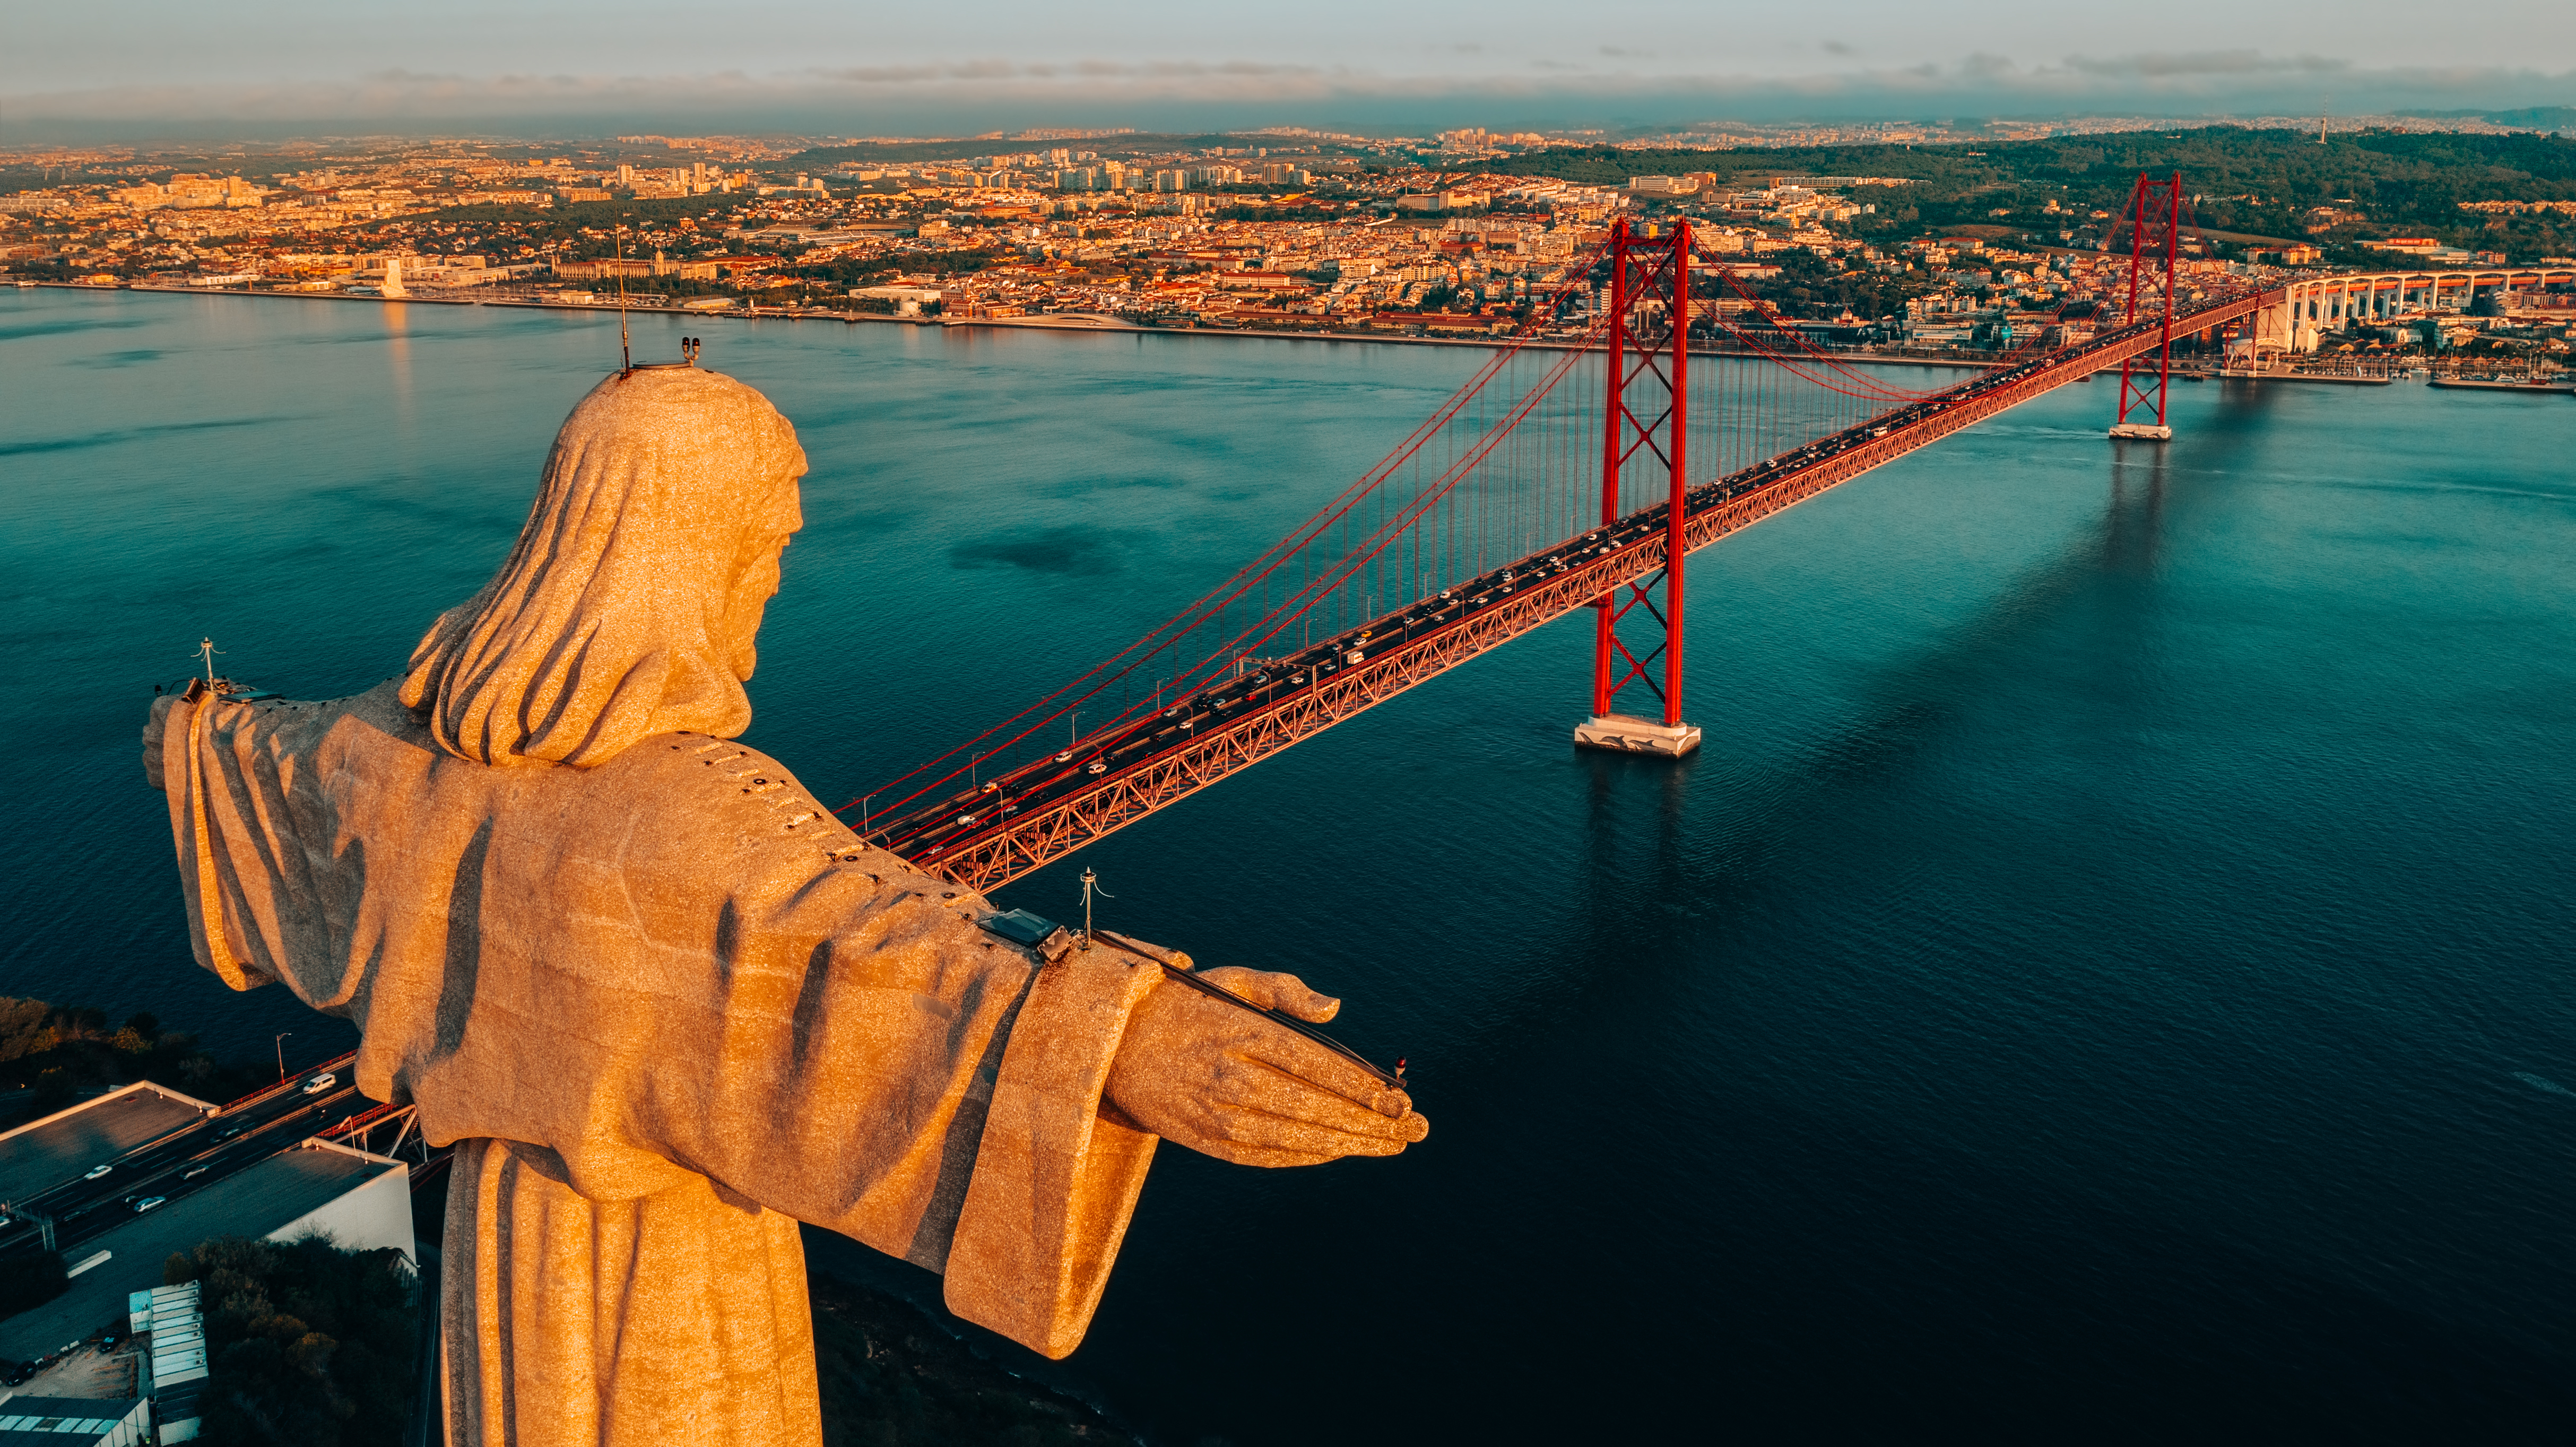 Foras to showcase Scottish startups in Lisbon